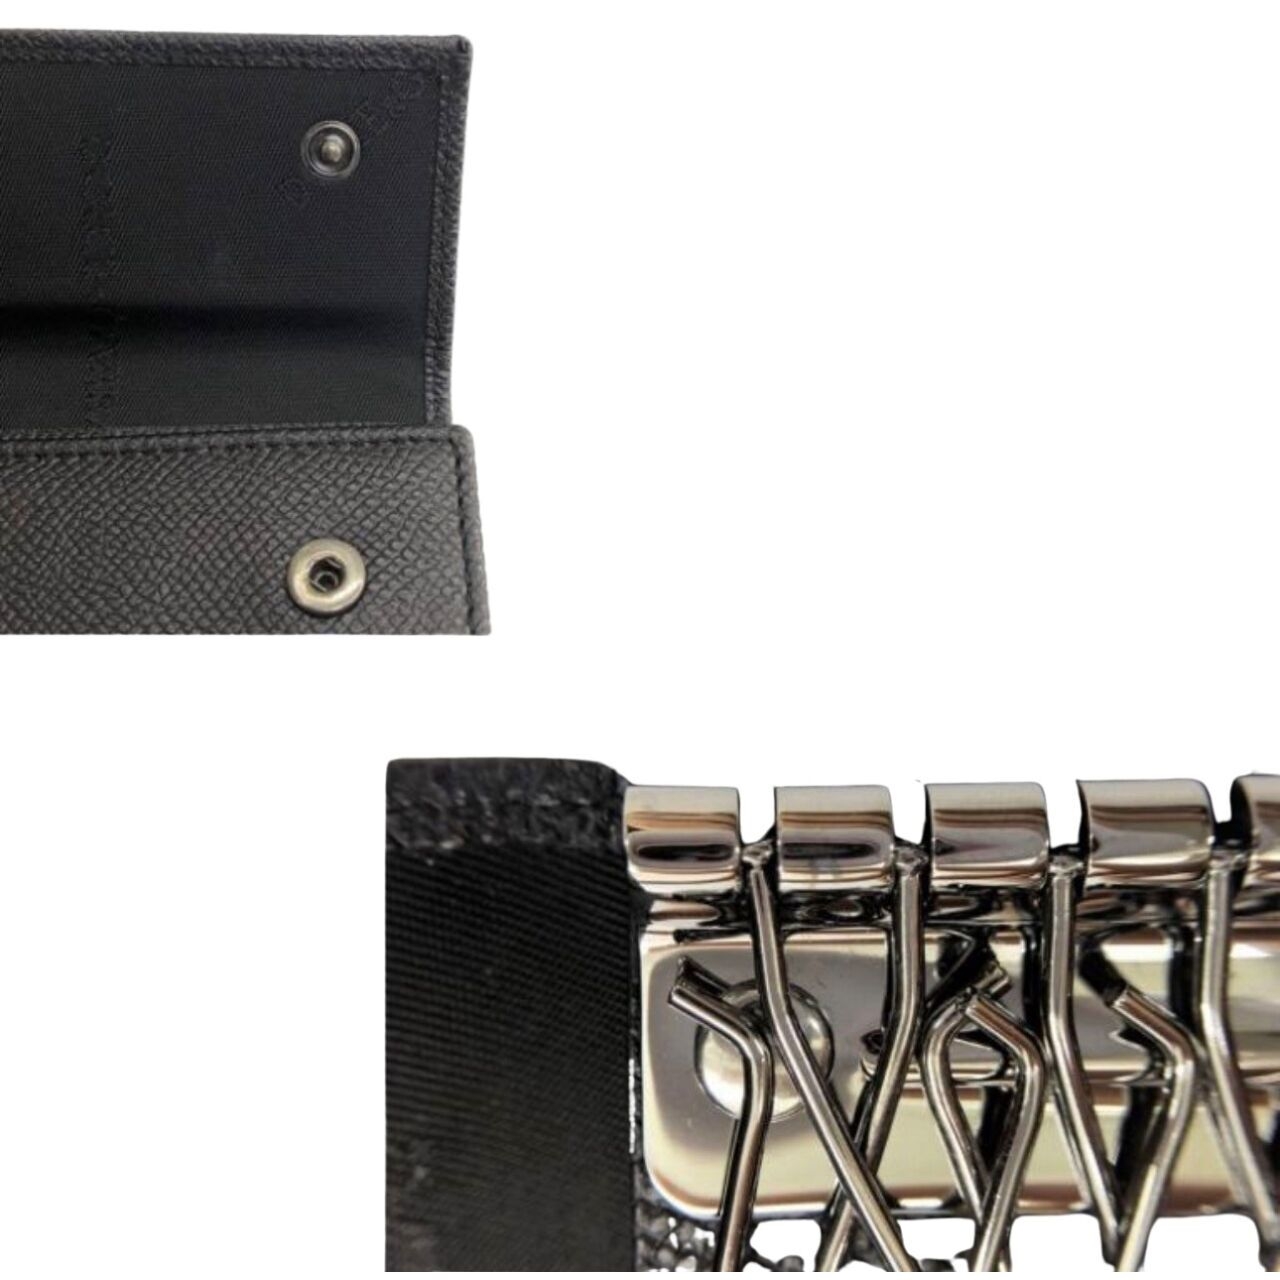 Dolce & Gabbana Black Leather Wallet Key Case